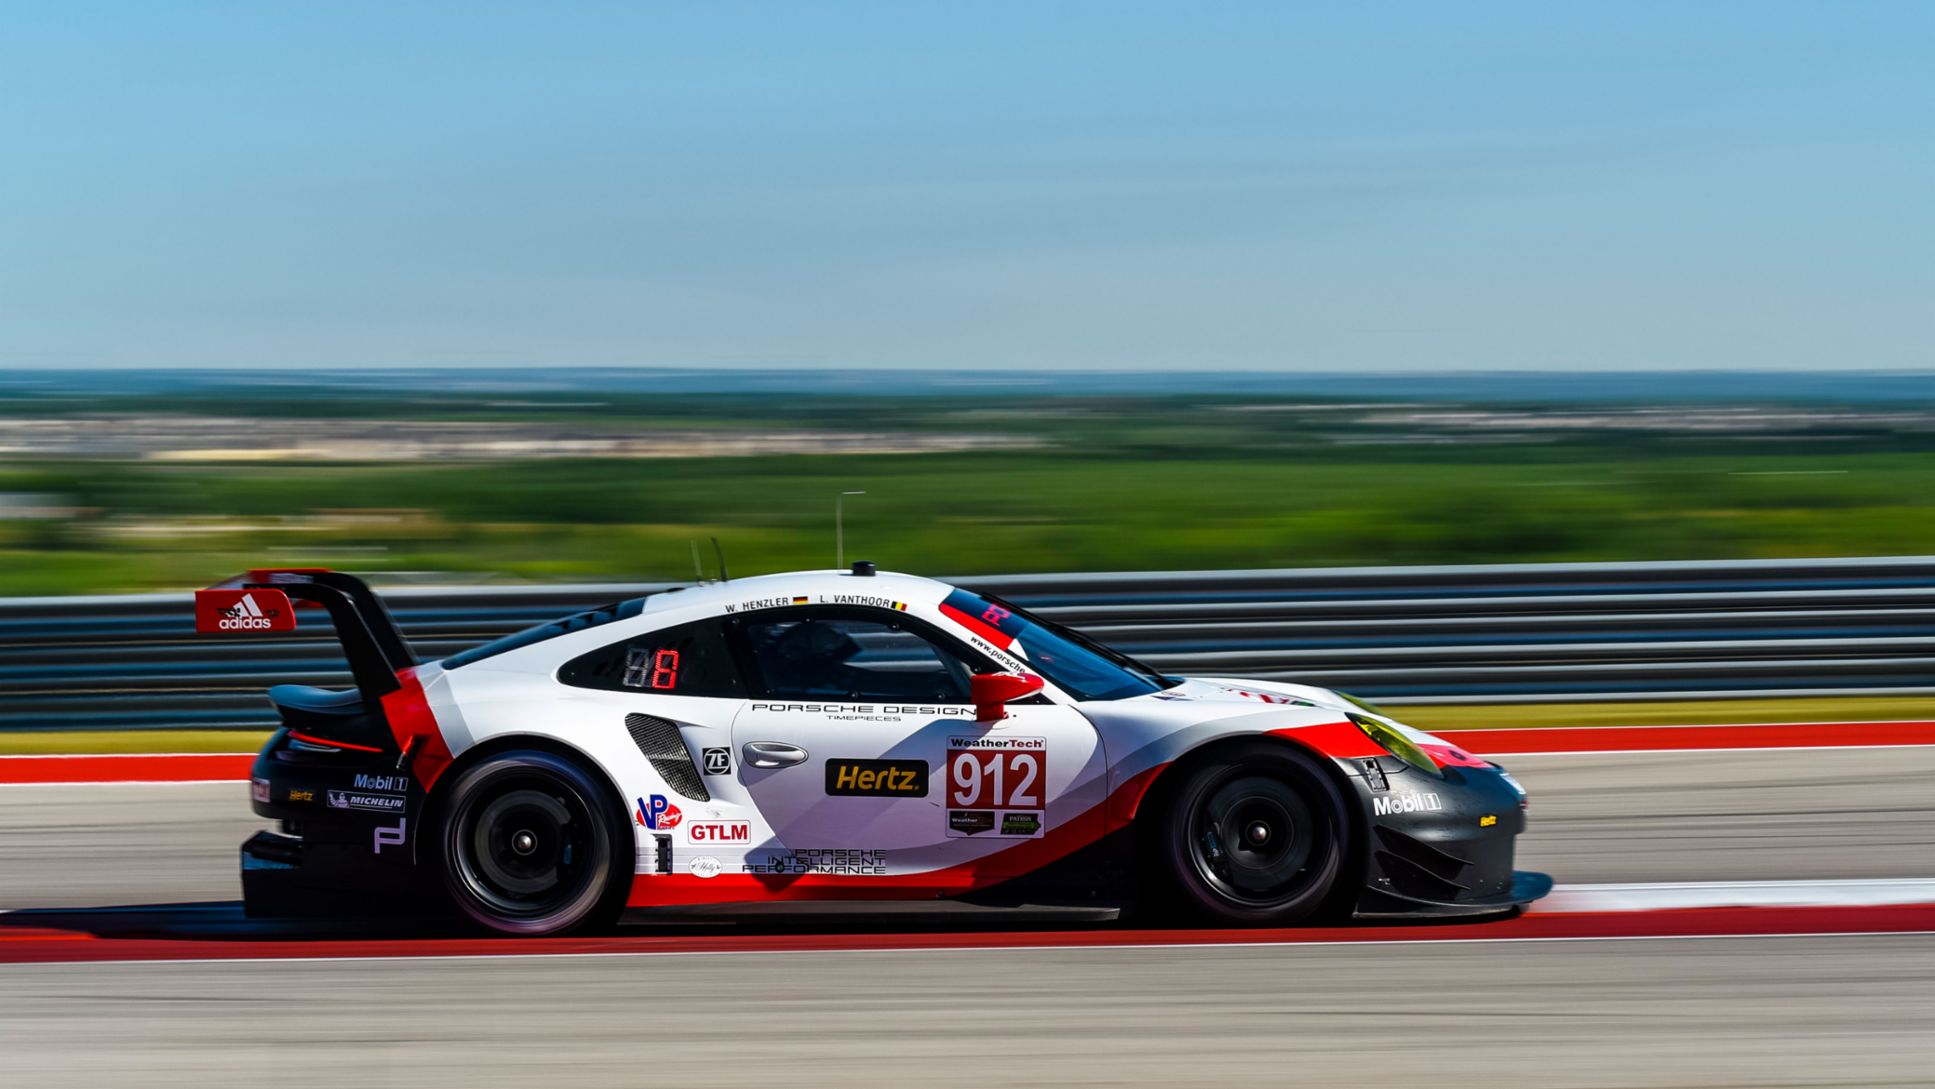 911 RSR, IMSA, Qualifying, Austin, Texas, 2017, Porsche AG